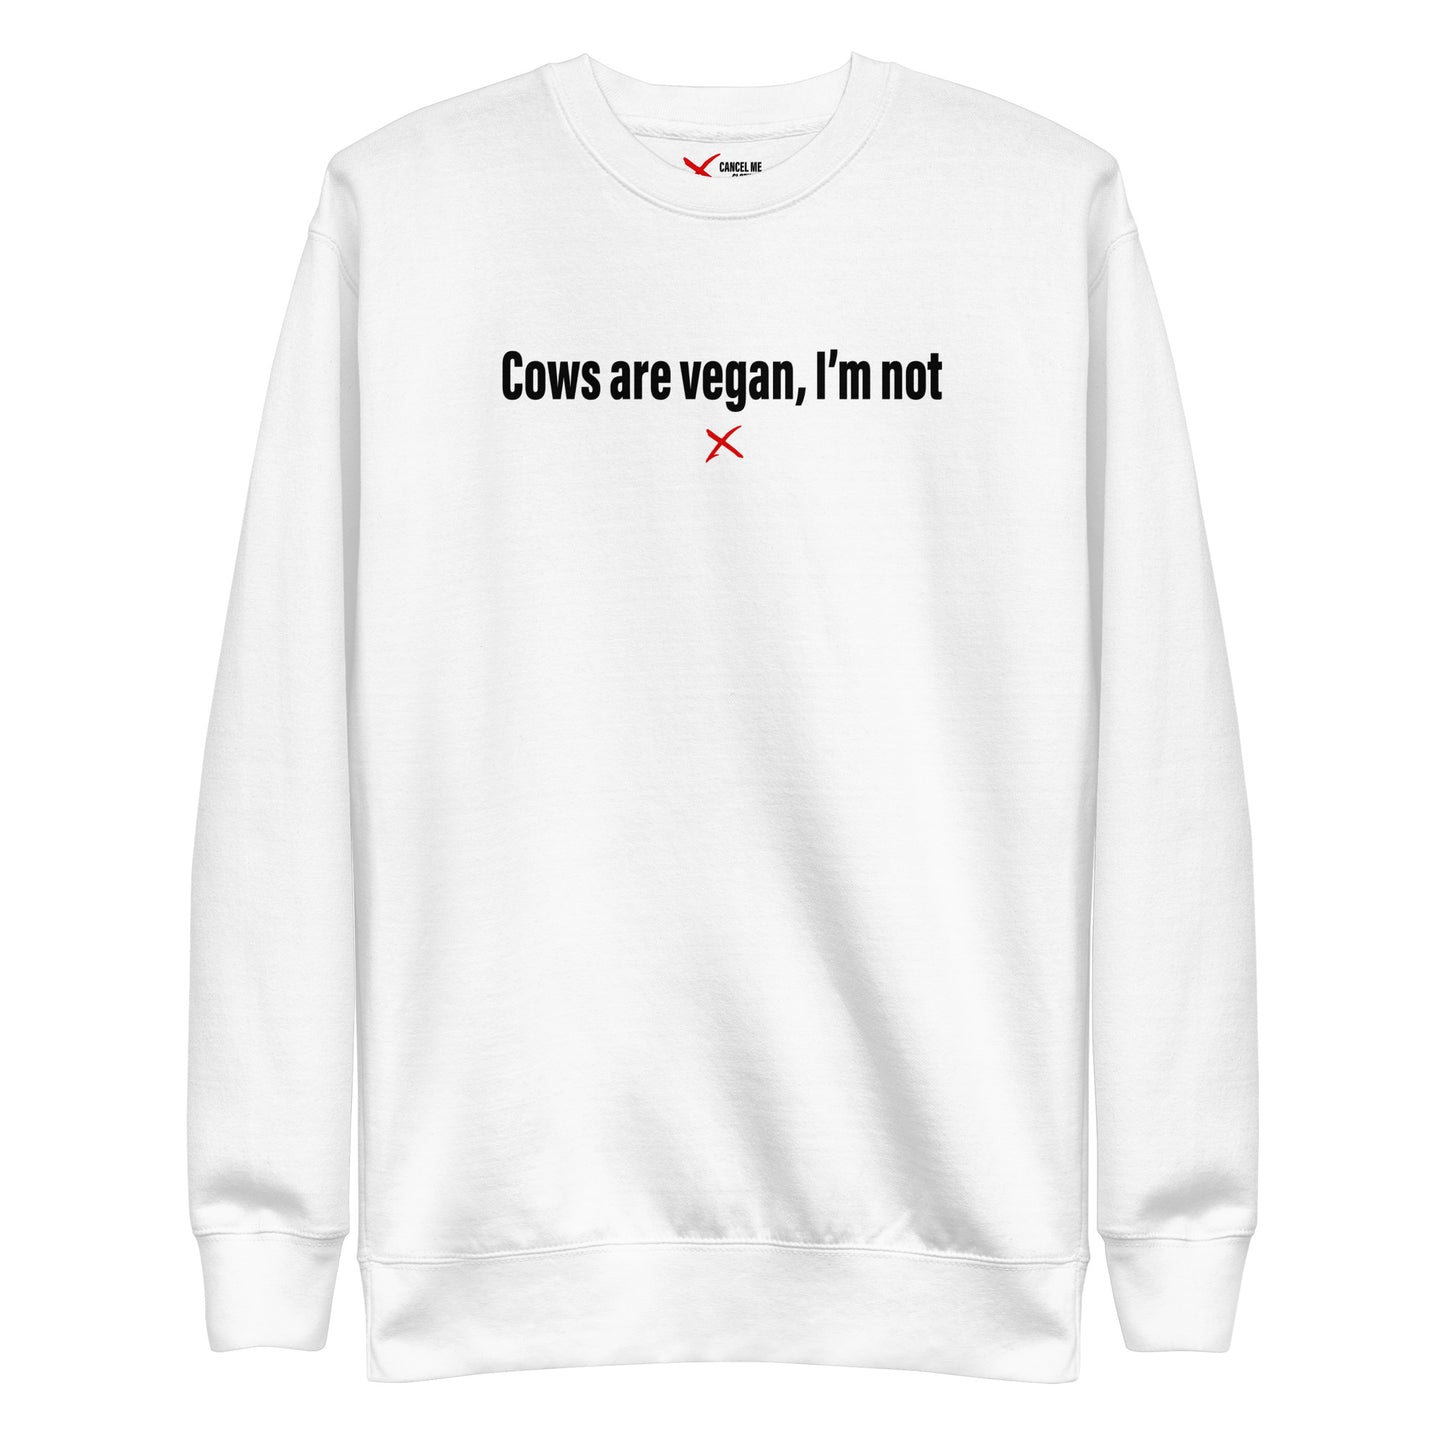 Cows are vegan, I'm not - Sweatshirt